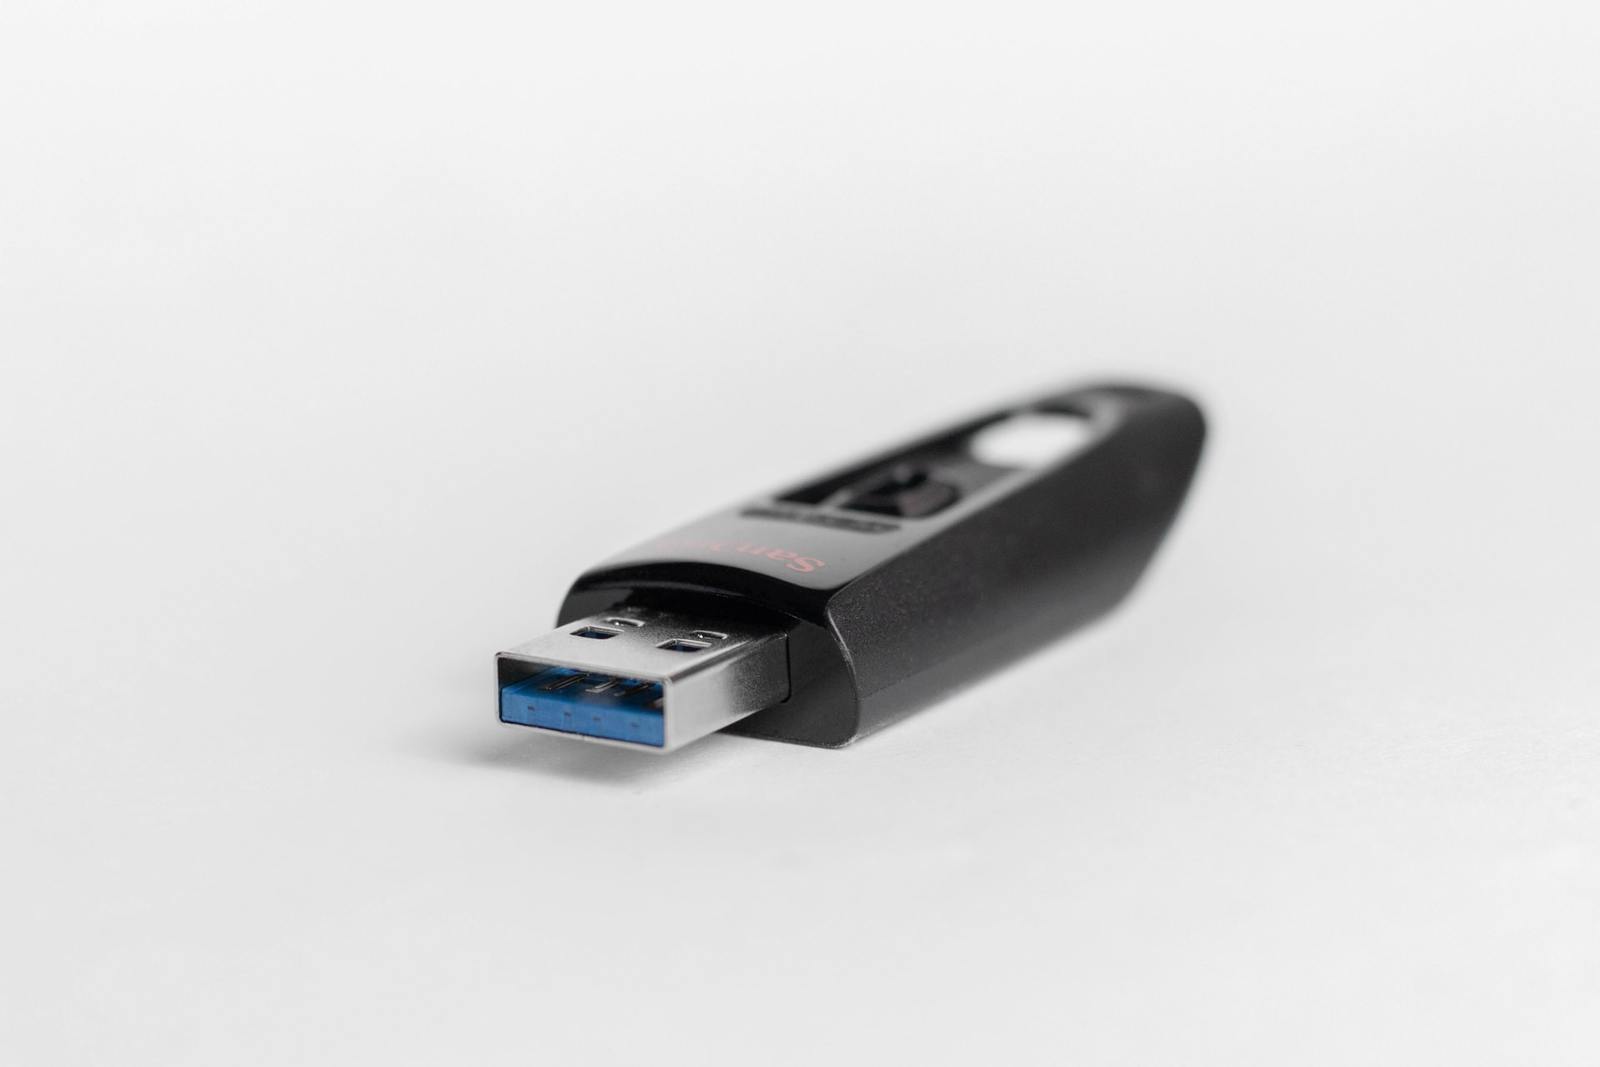 Black USB stick